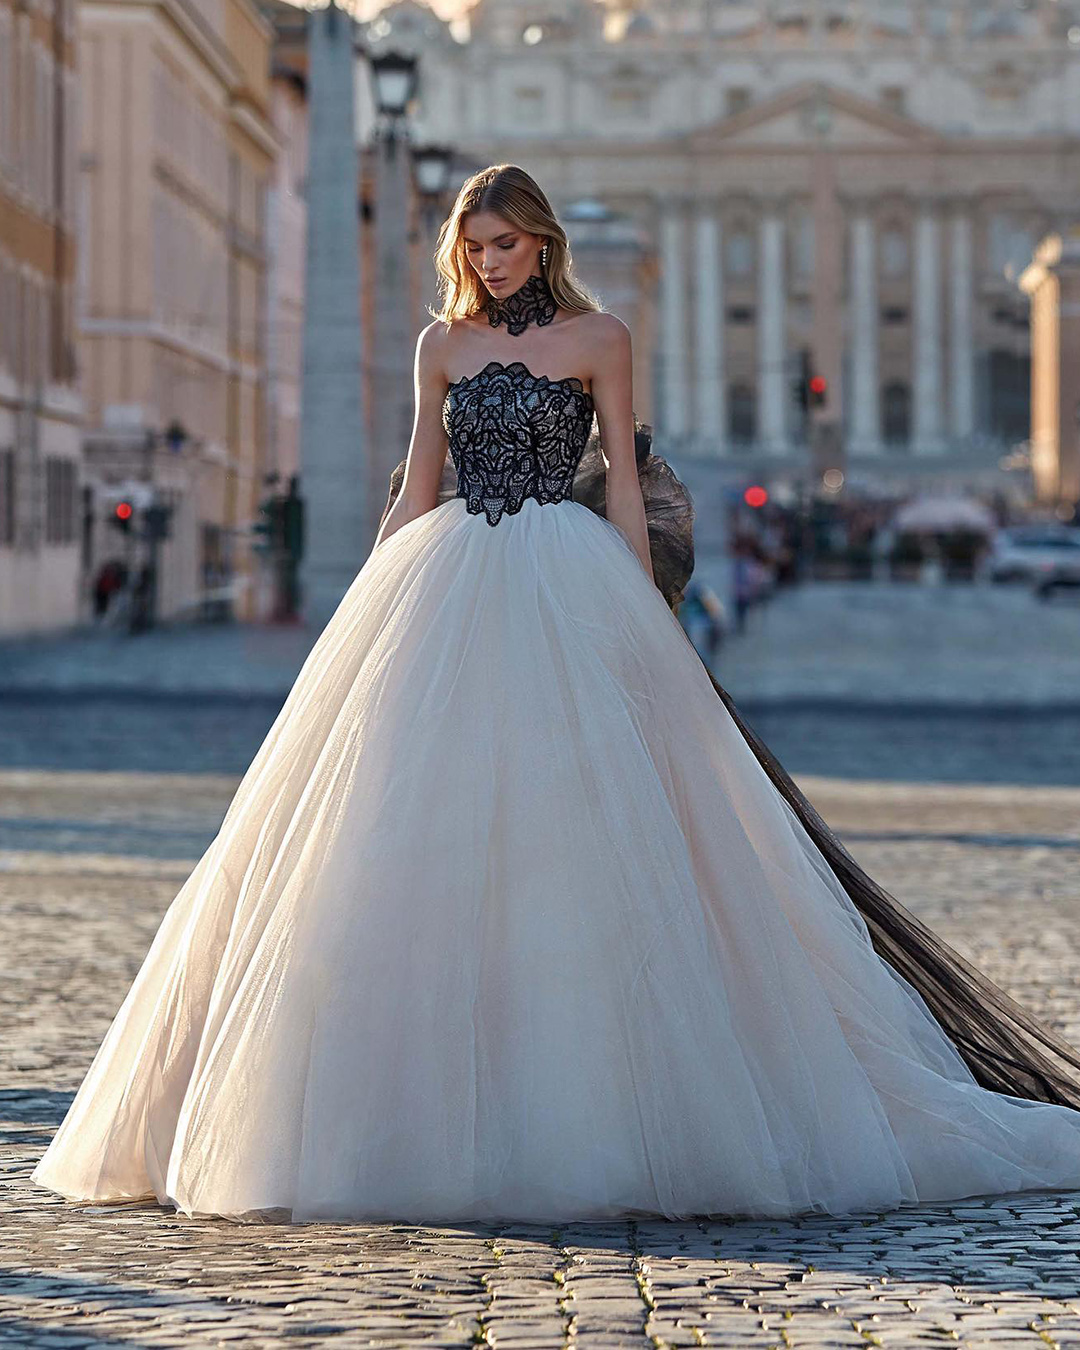 gothic wedding dresses with white strapless neckline ball gown nicole milano